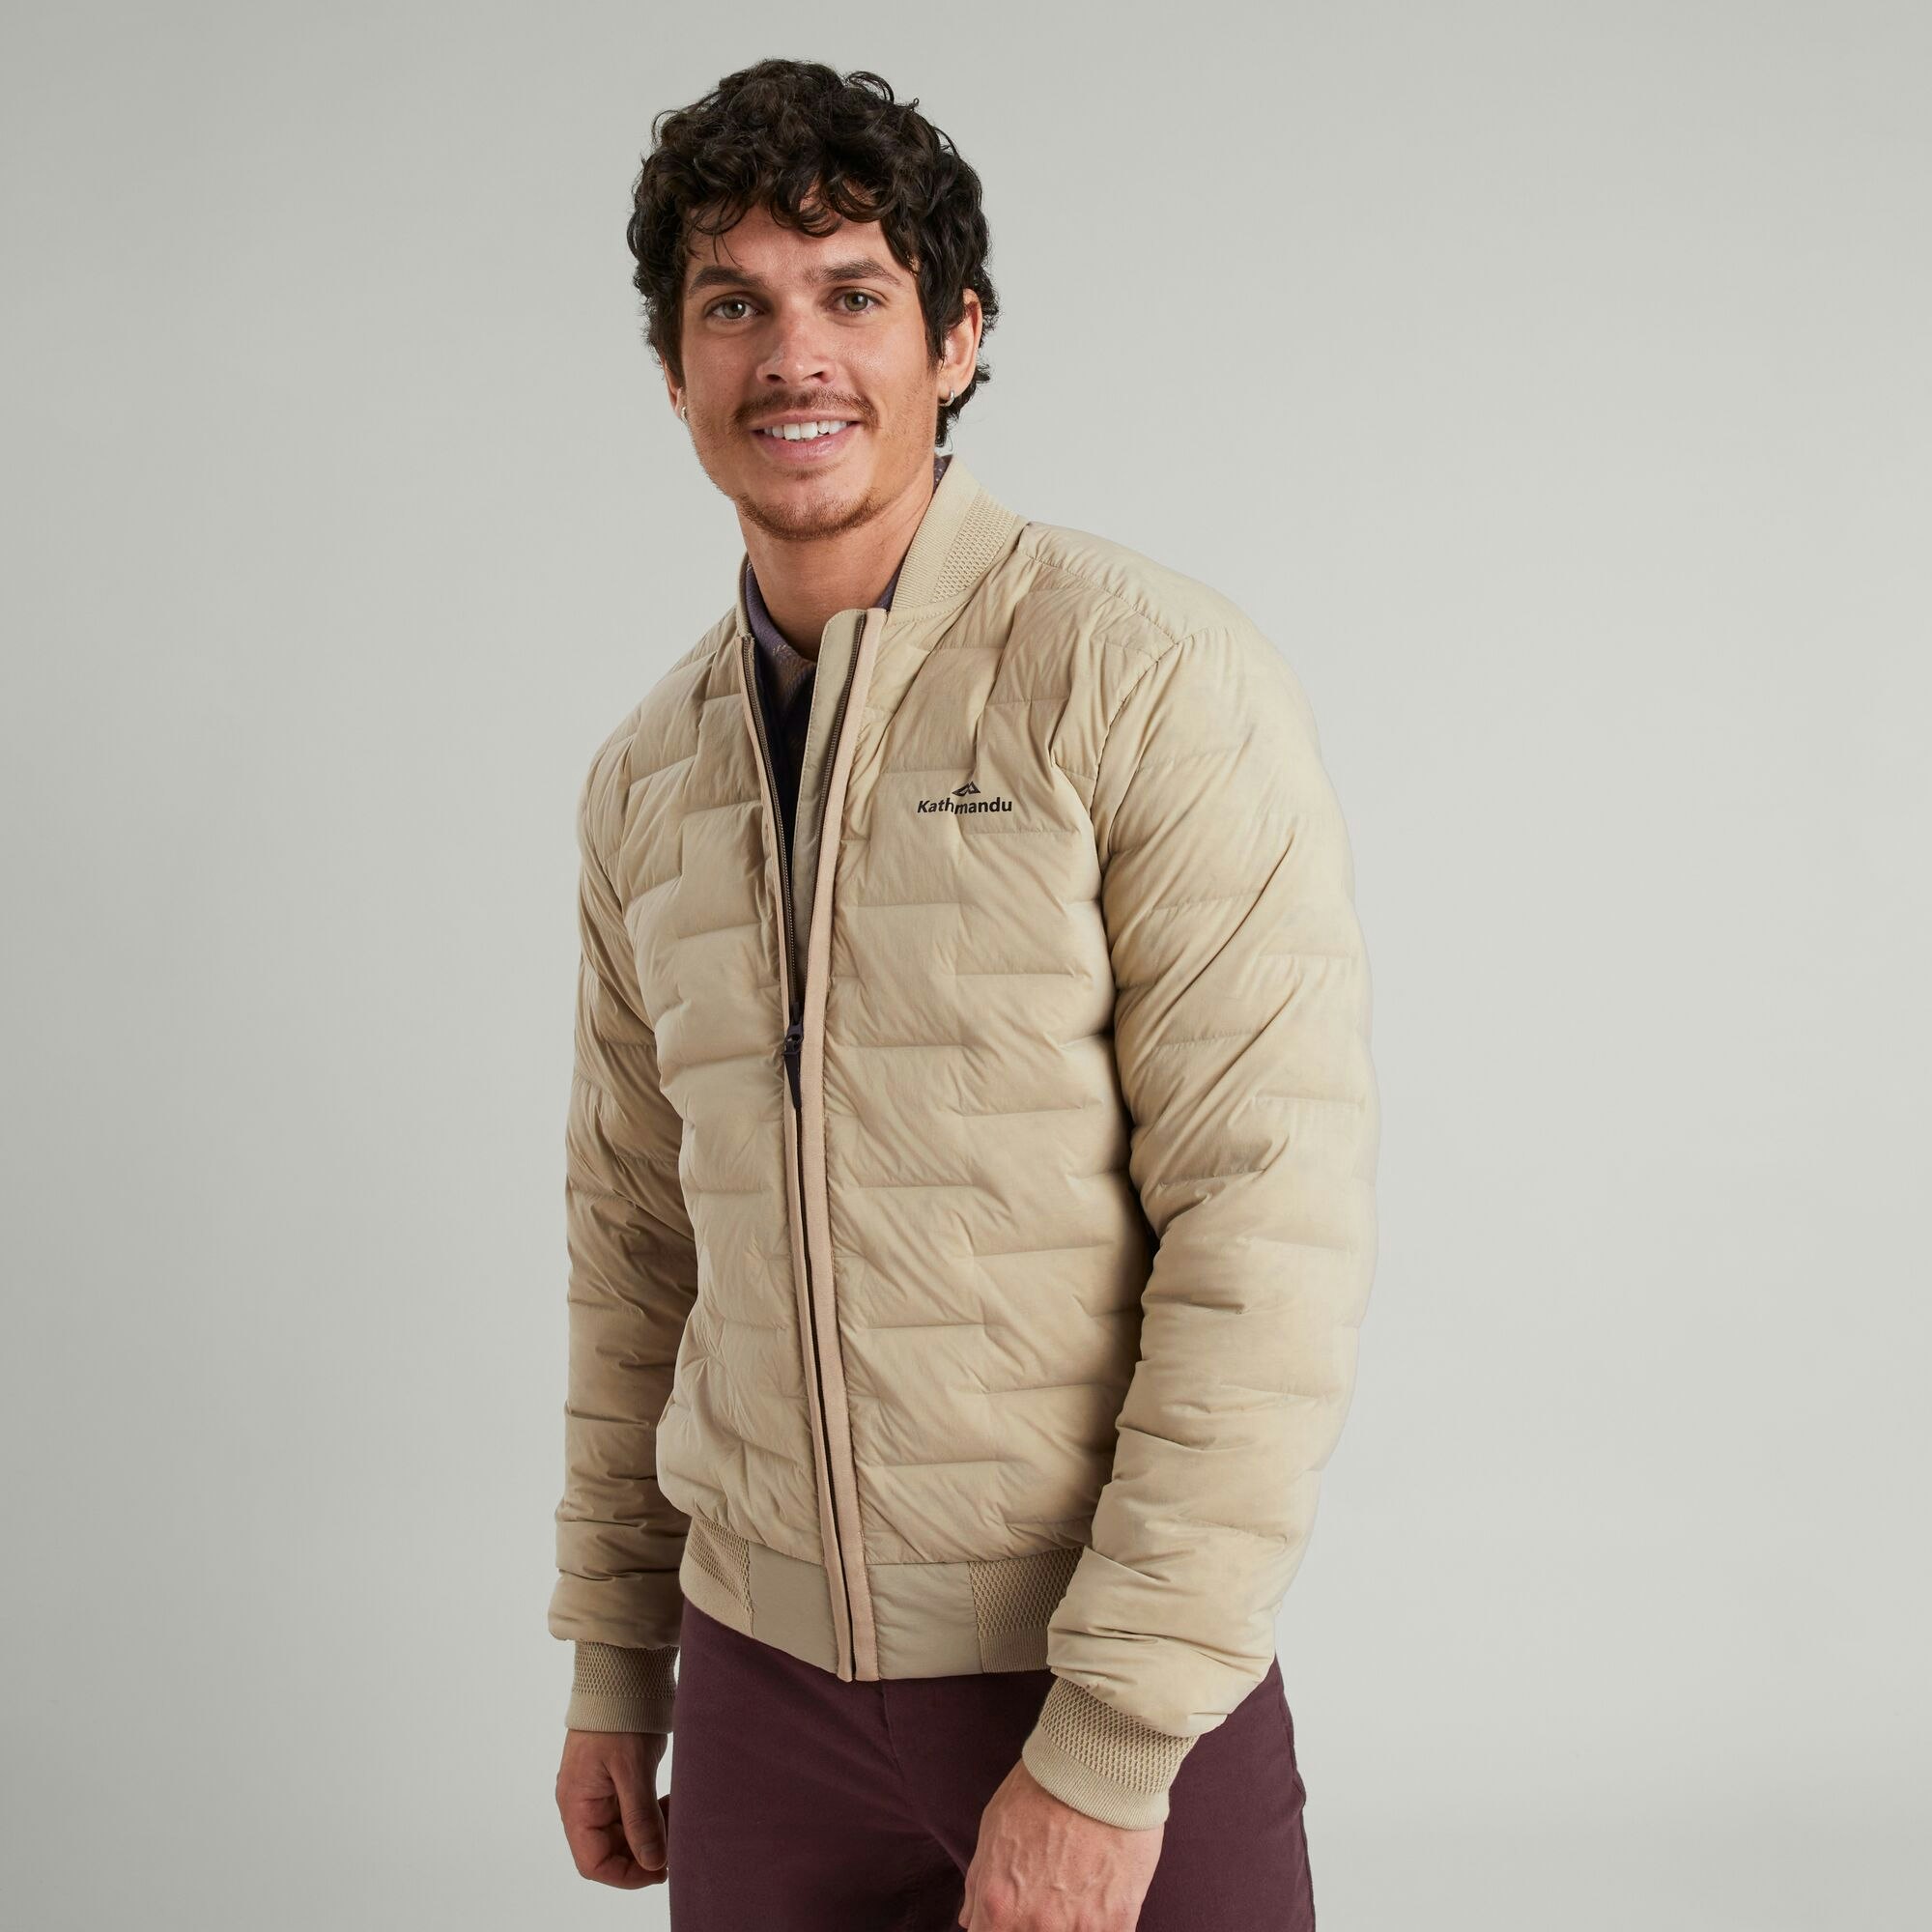 Amazon BUDGET Winterwear Haul 2022 From Rs 800| Cheapest Leather jacket,  denim jacket, hoodies etc - YouTube